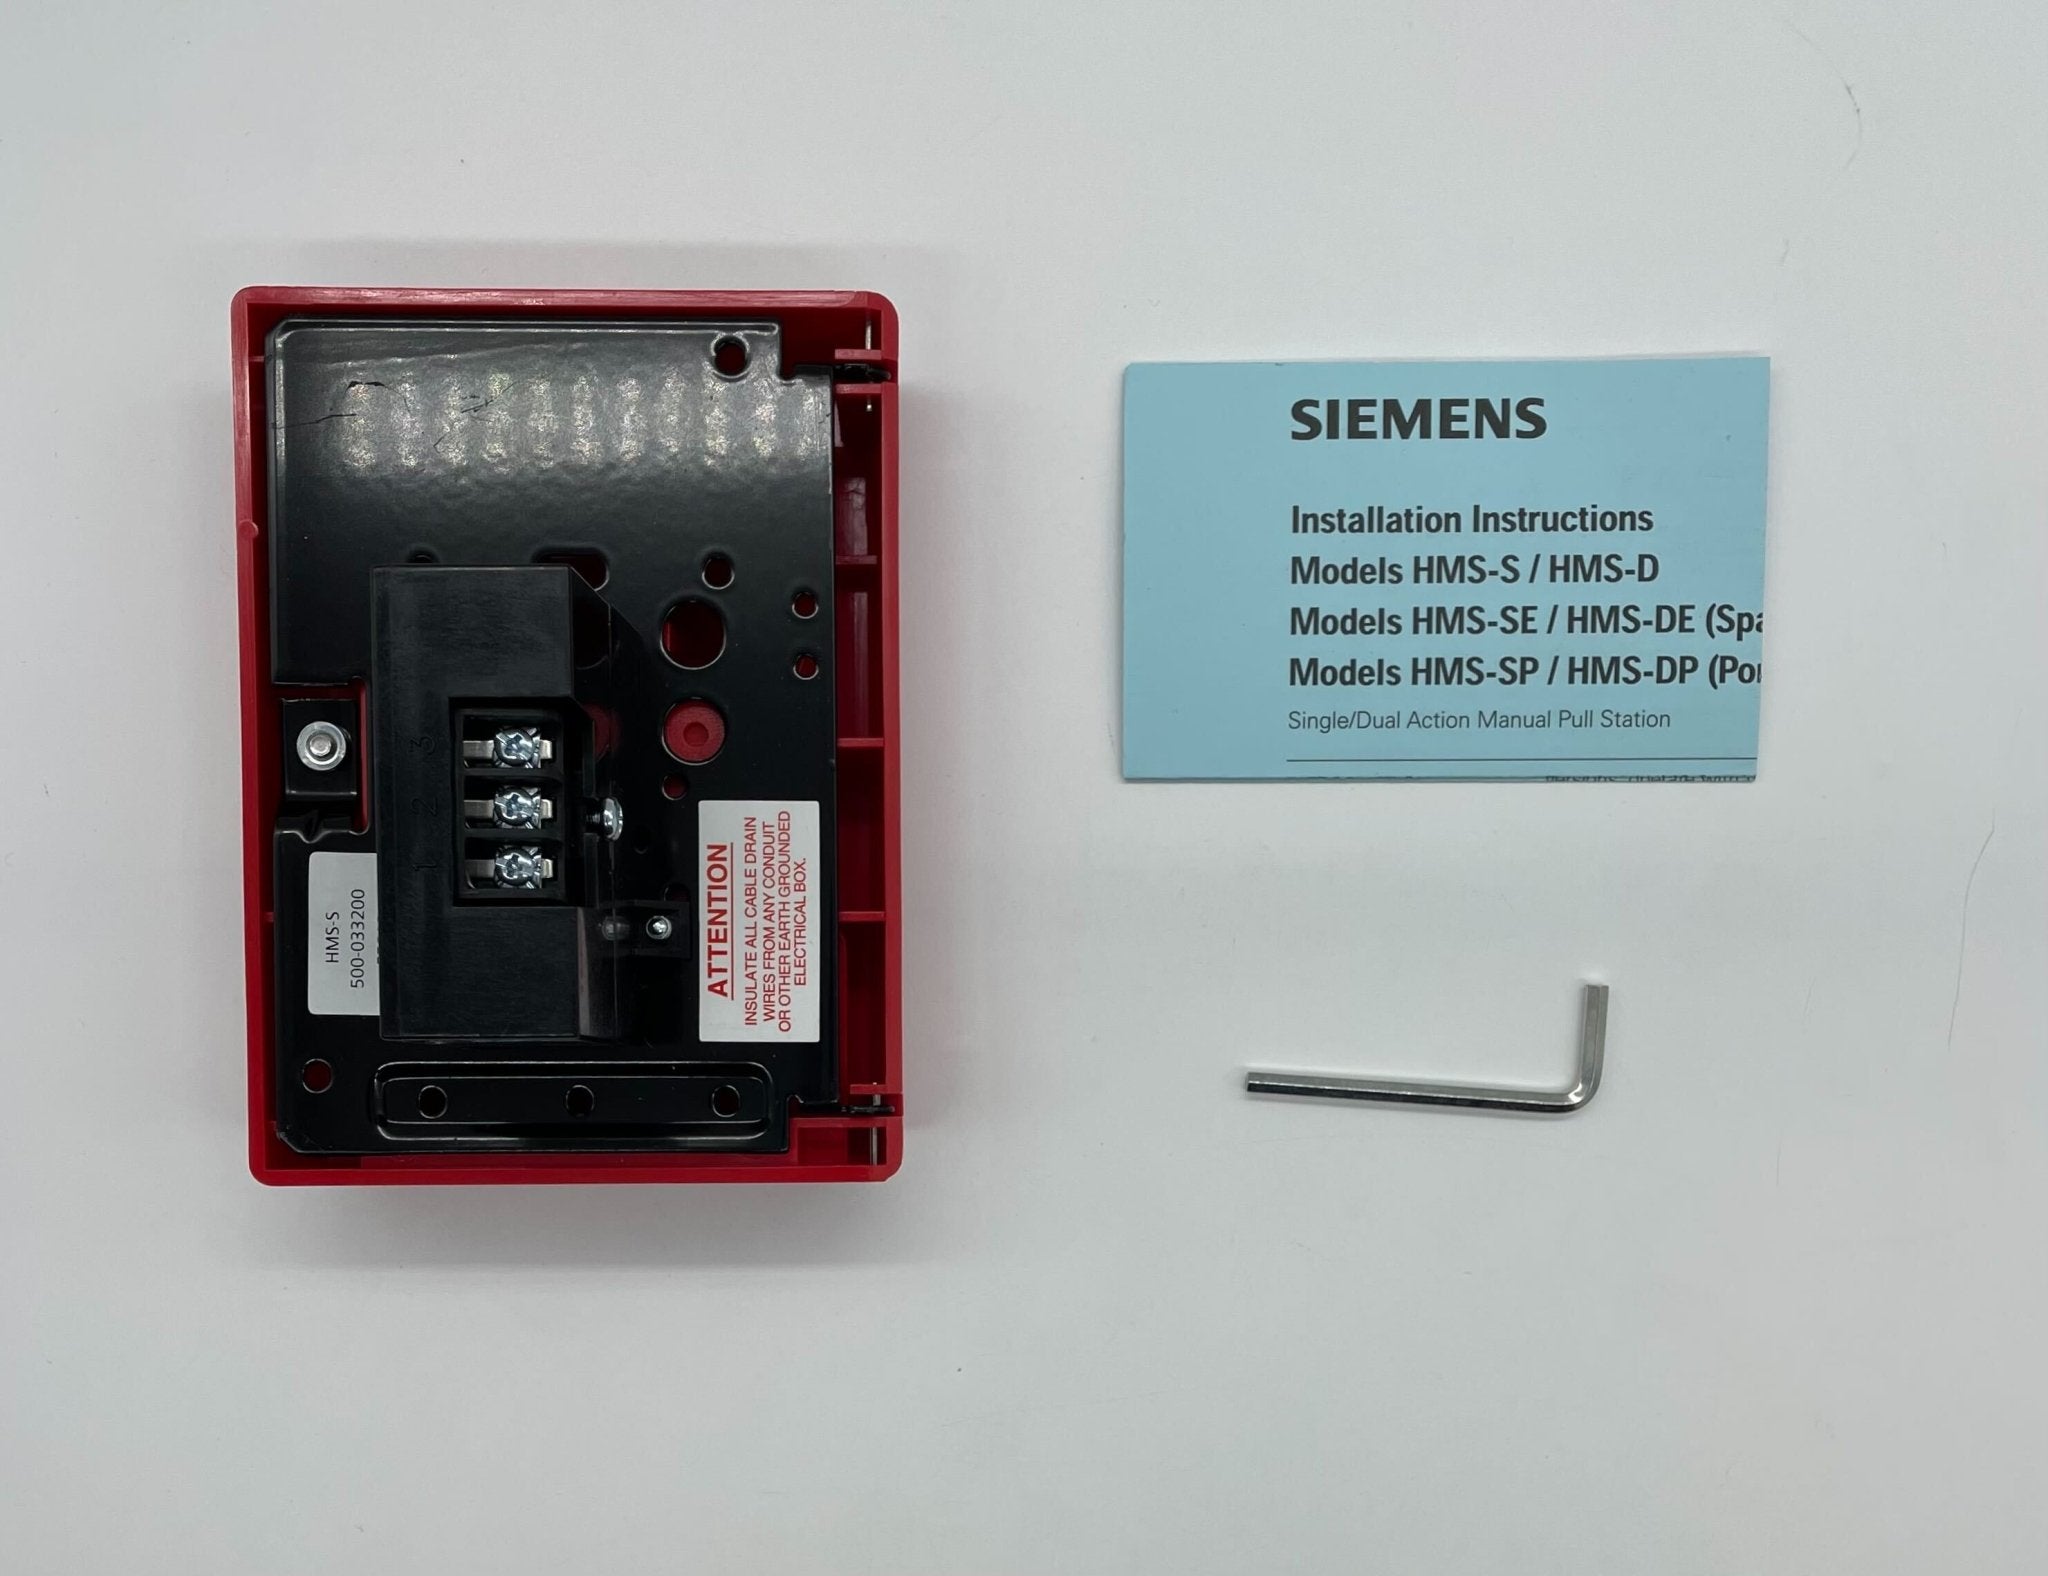 Siemens HMS-S Intelligent Pull Station - The Fire Alarm Supplier